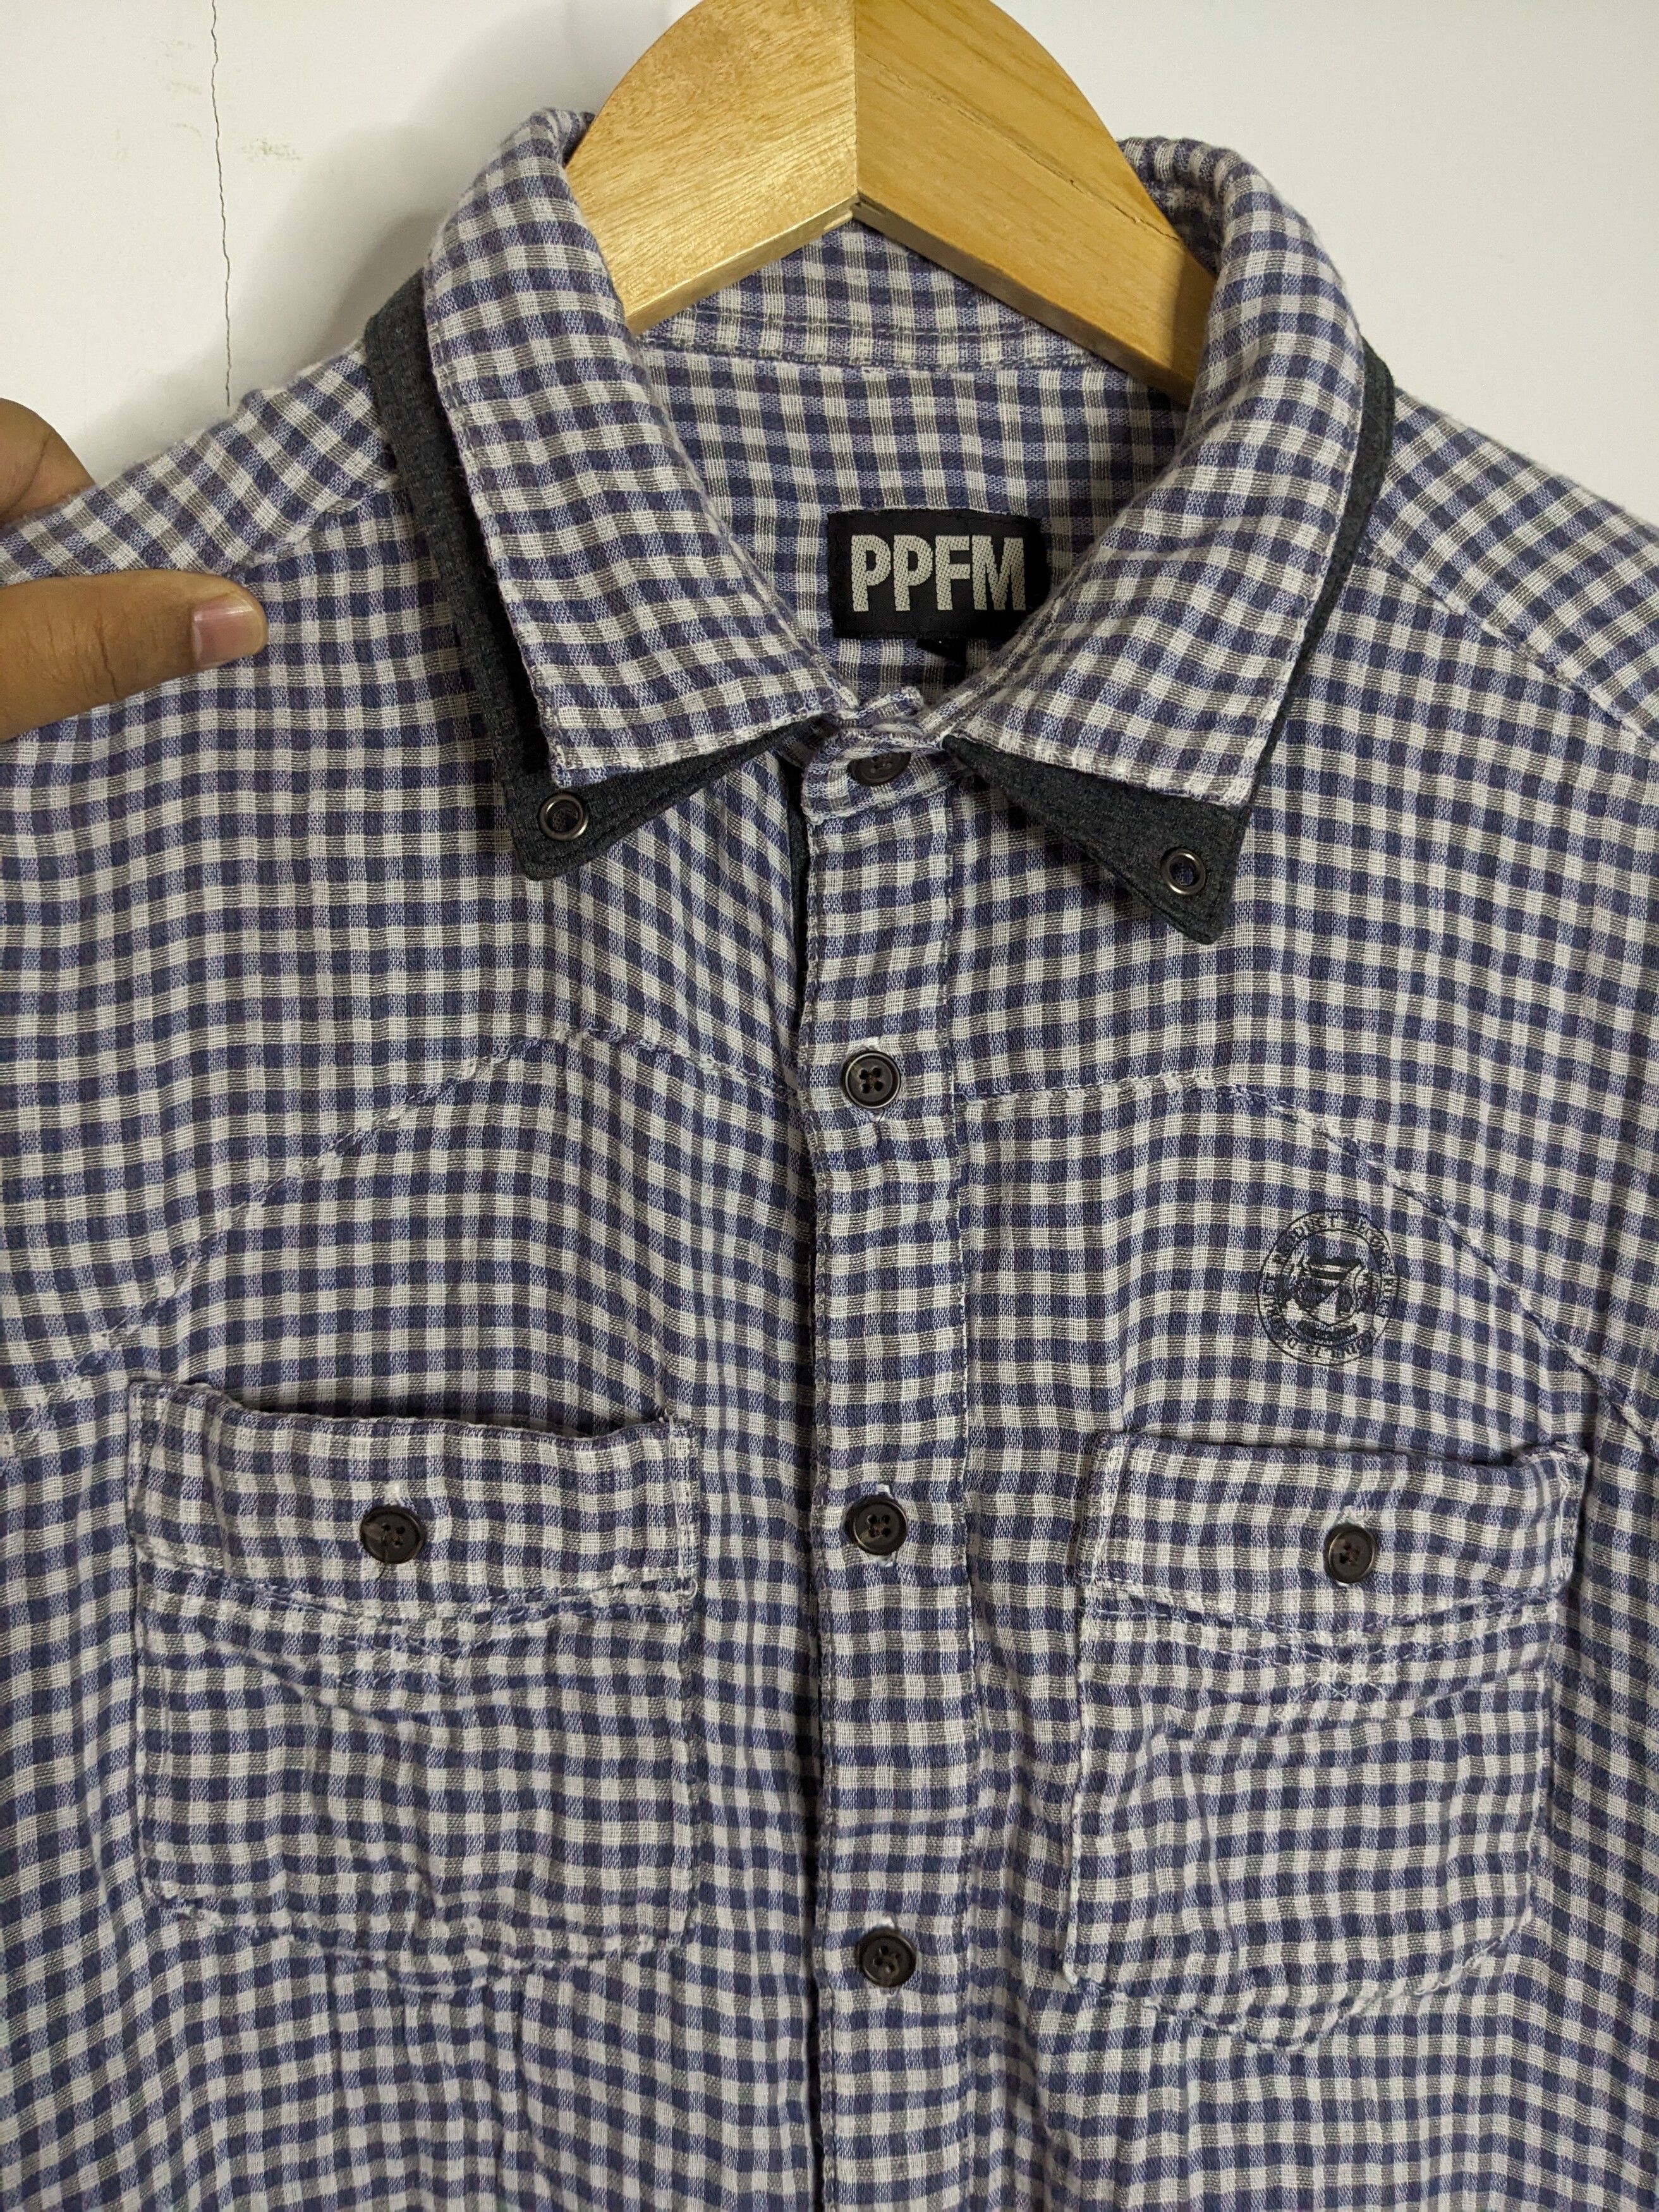 Japanese Brand - PPFM Eastern Rock Reconstruct Double Collar Shirt M Japan. - 4